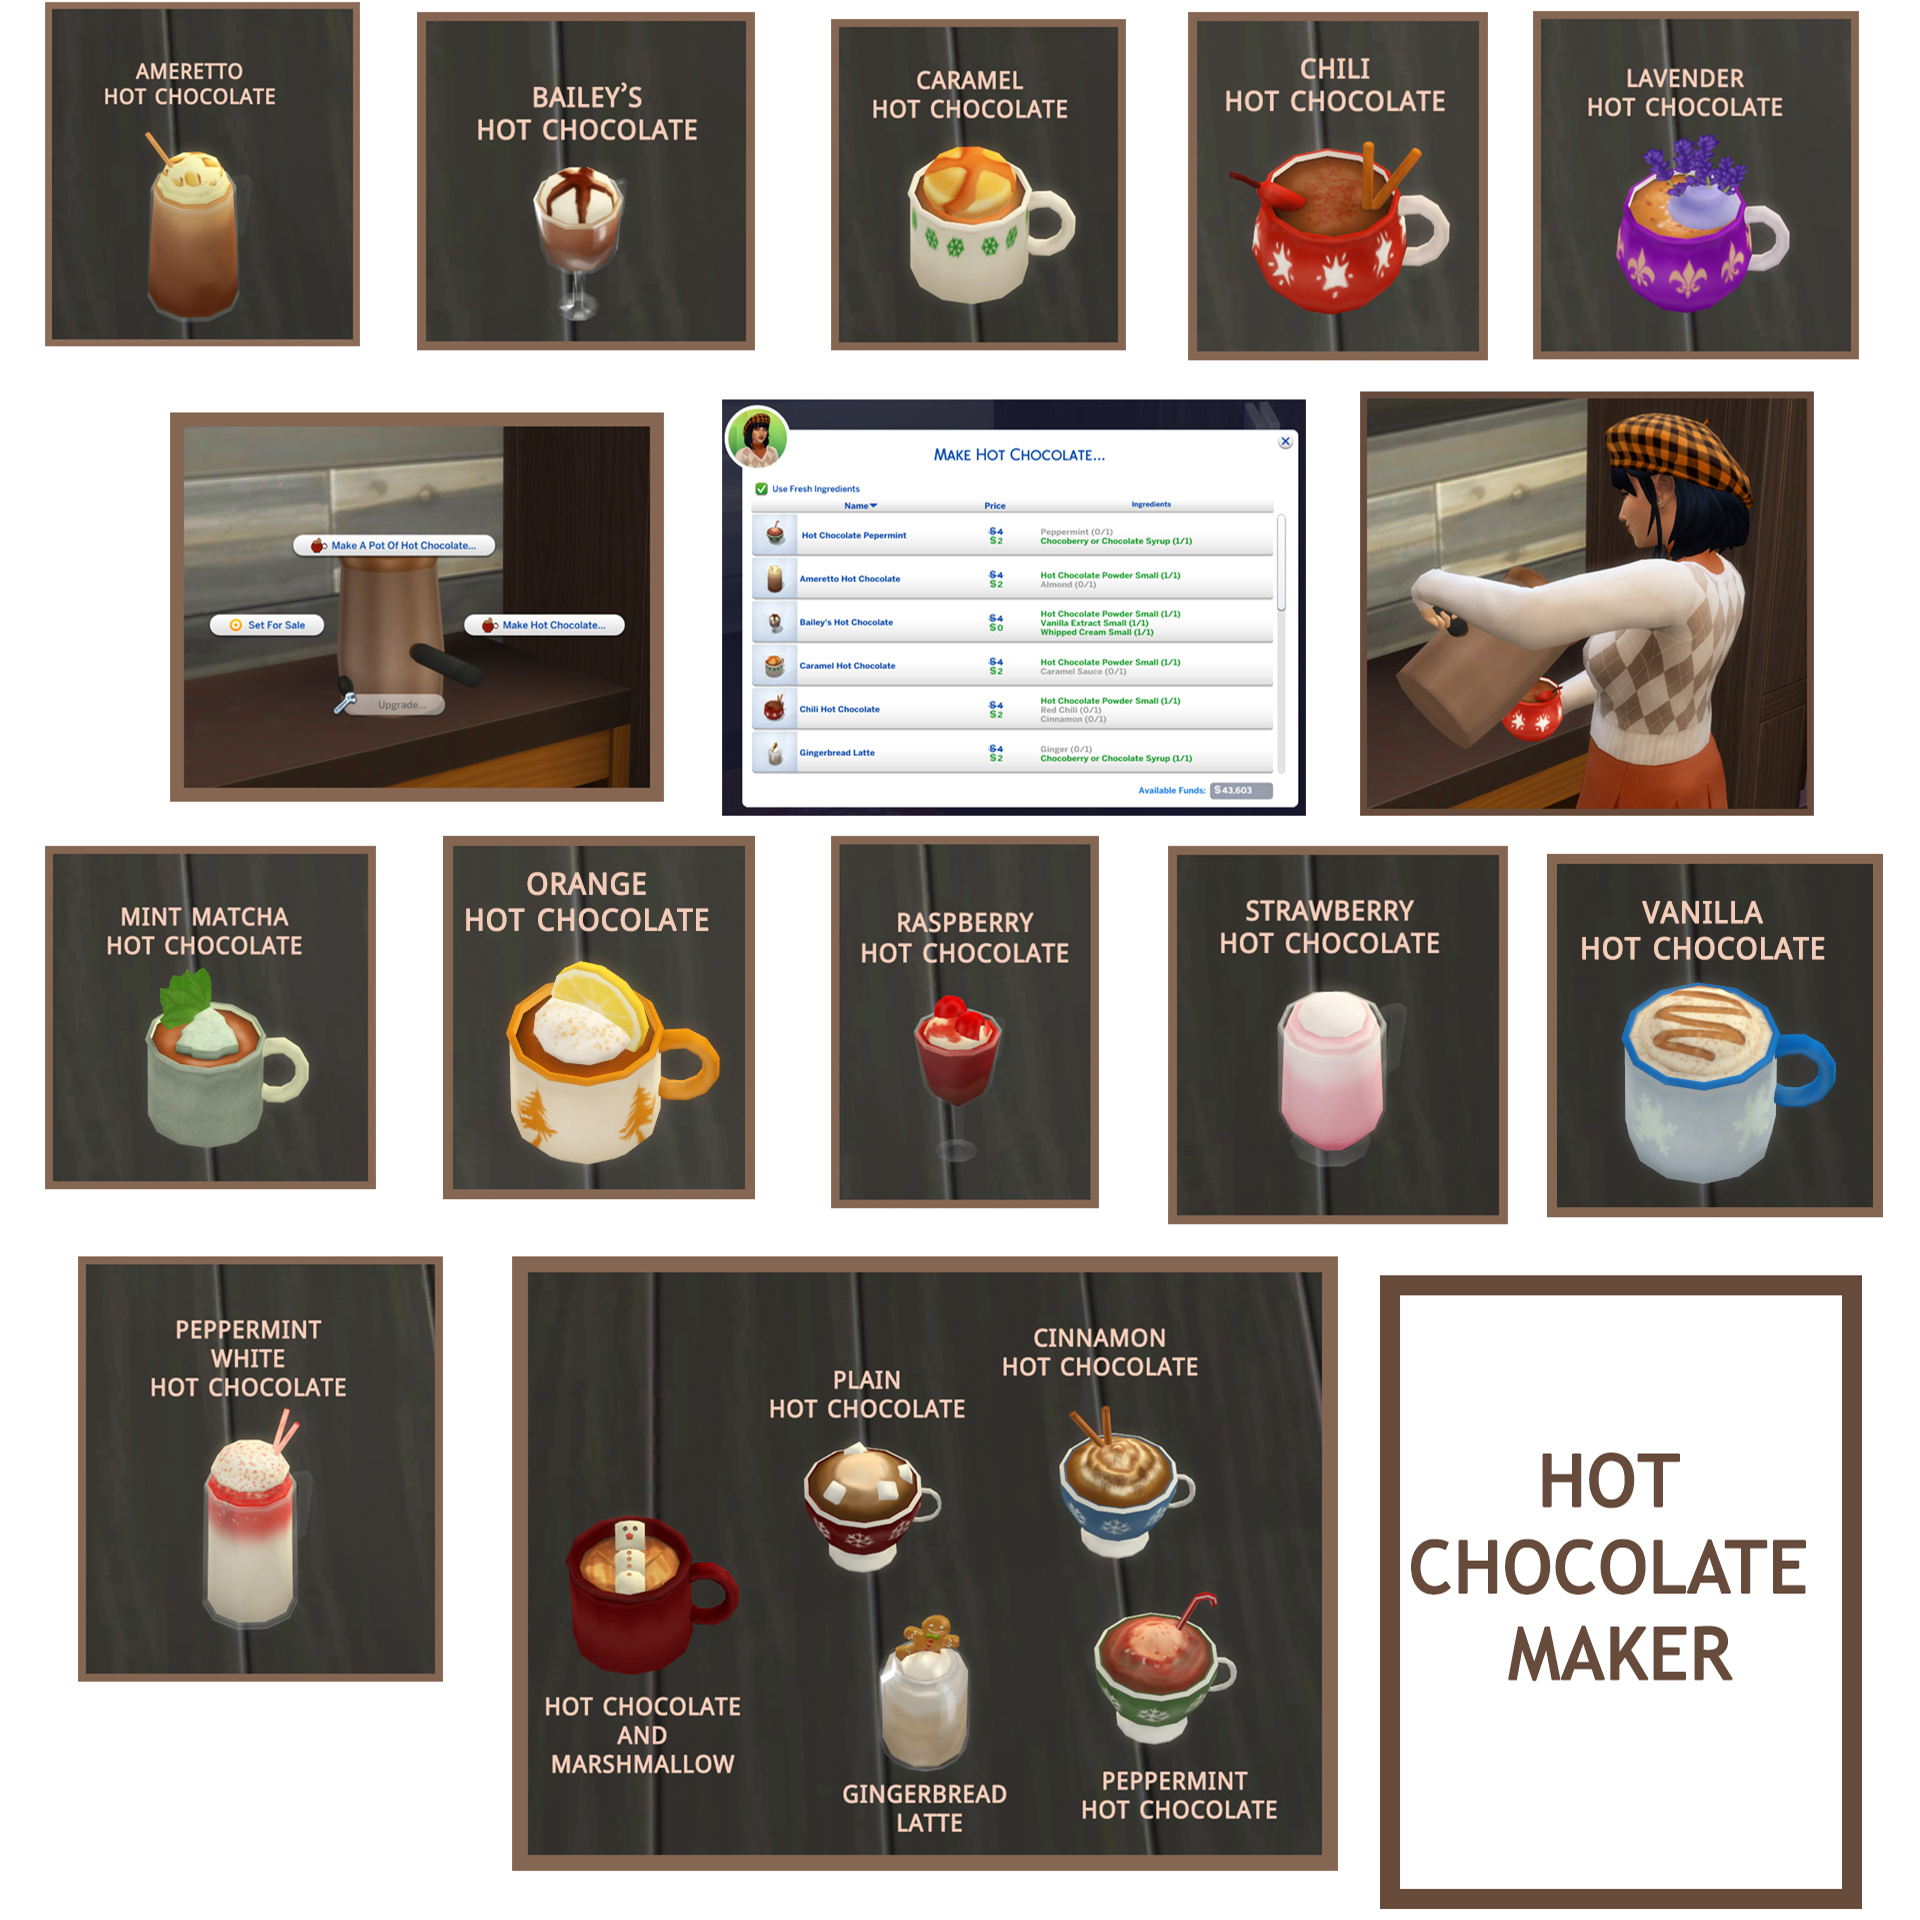 HOT CHOCOLATE MAKER project avatar